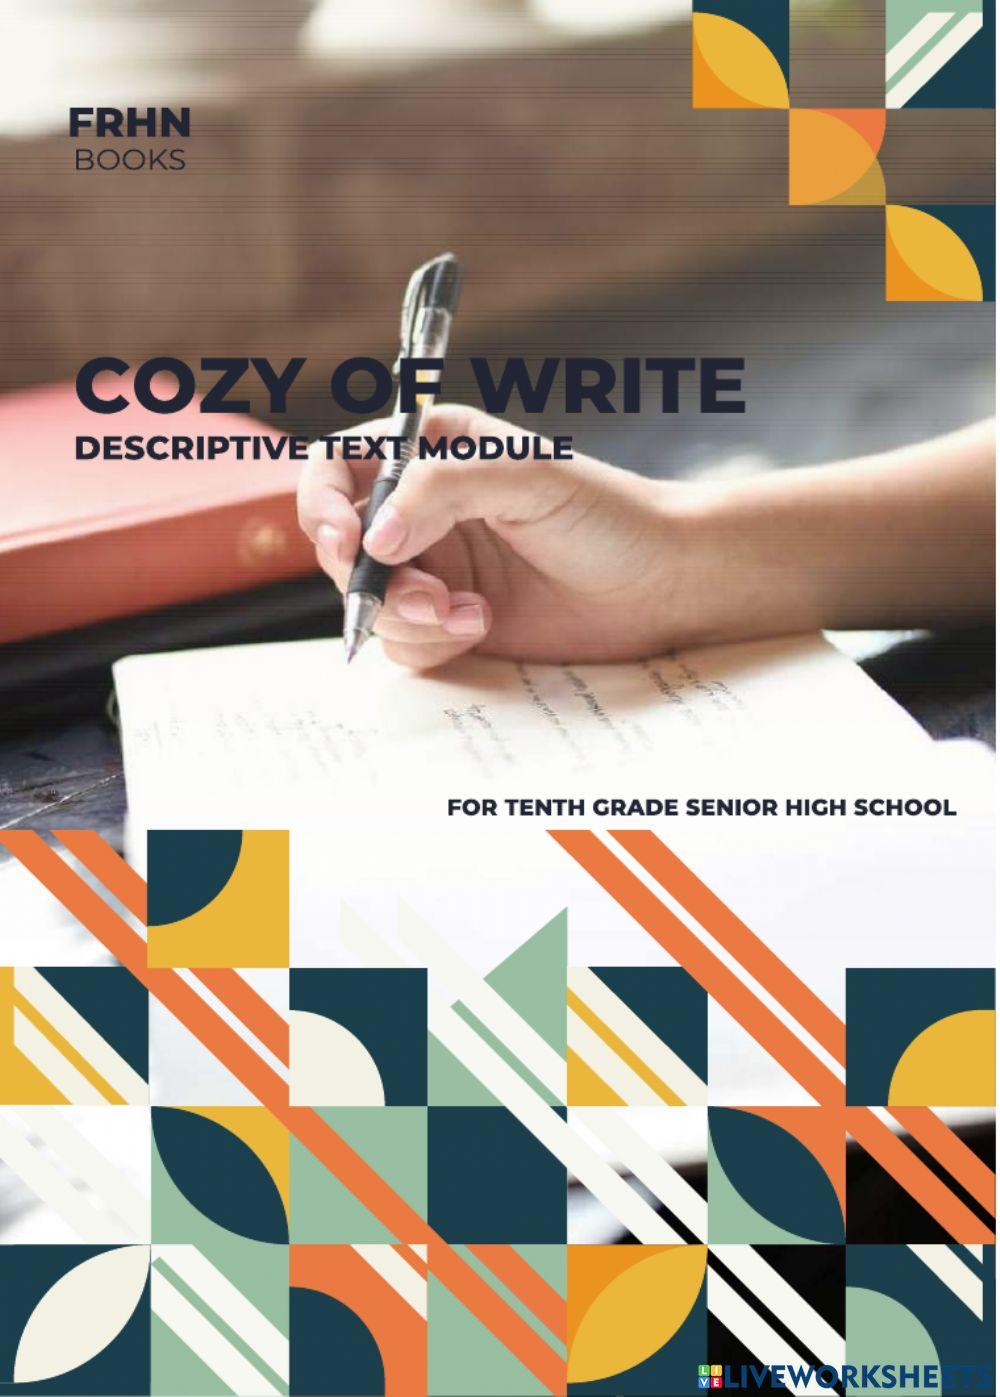 Cozy of Writing Descriptive Text Module for Tenth Grade Senior High School Students